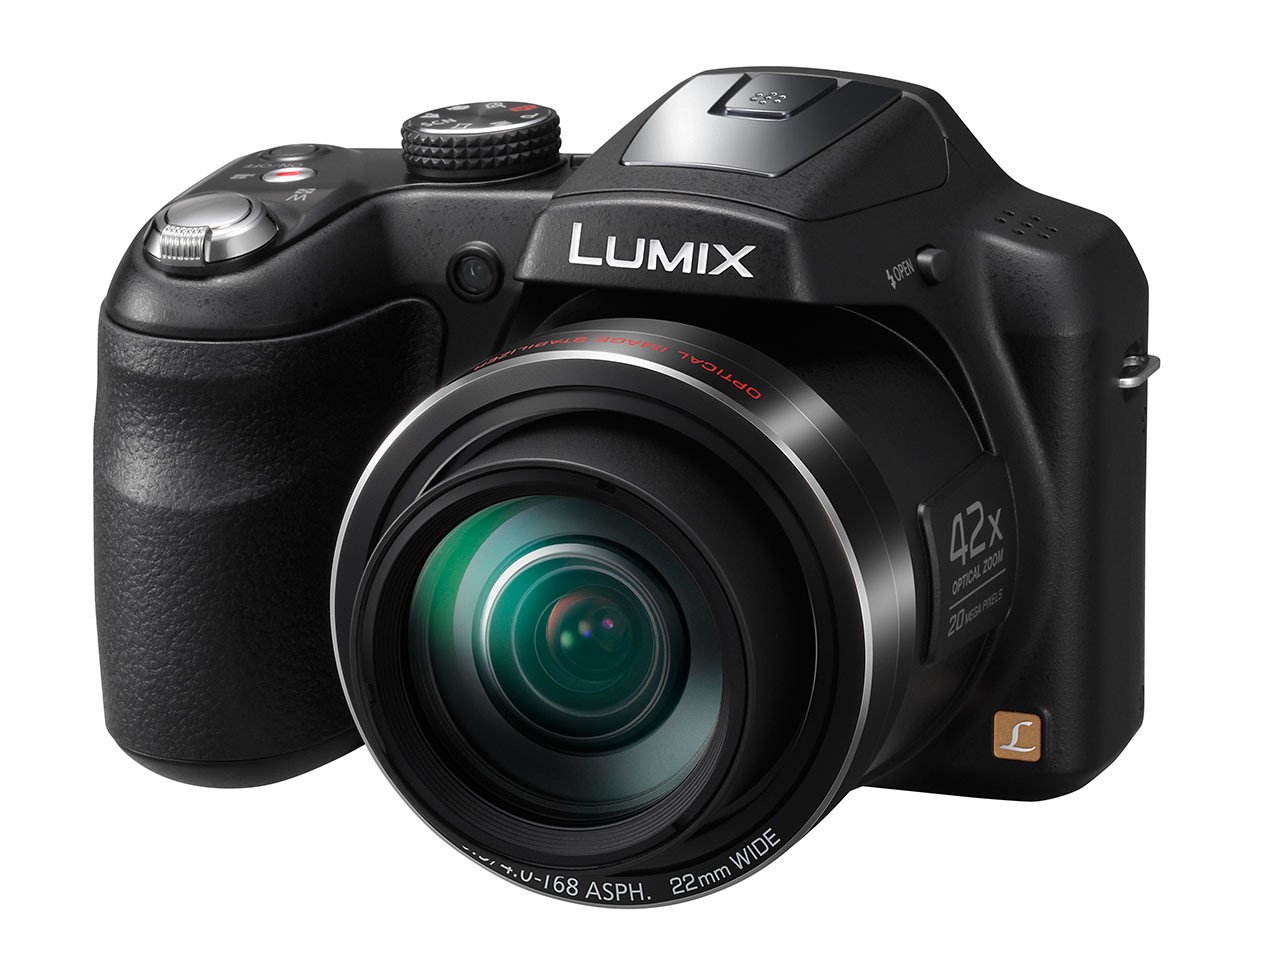 CES 2014 Panasonic Lumix LZ40 Announced, Affordable 42x Superzoom Camera